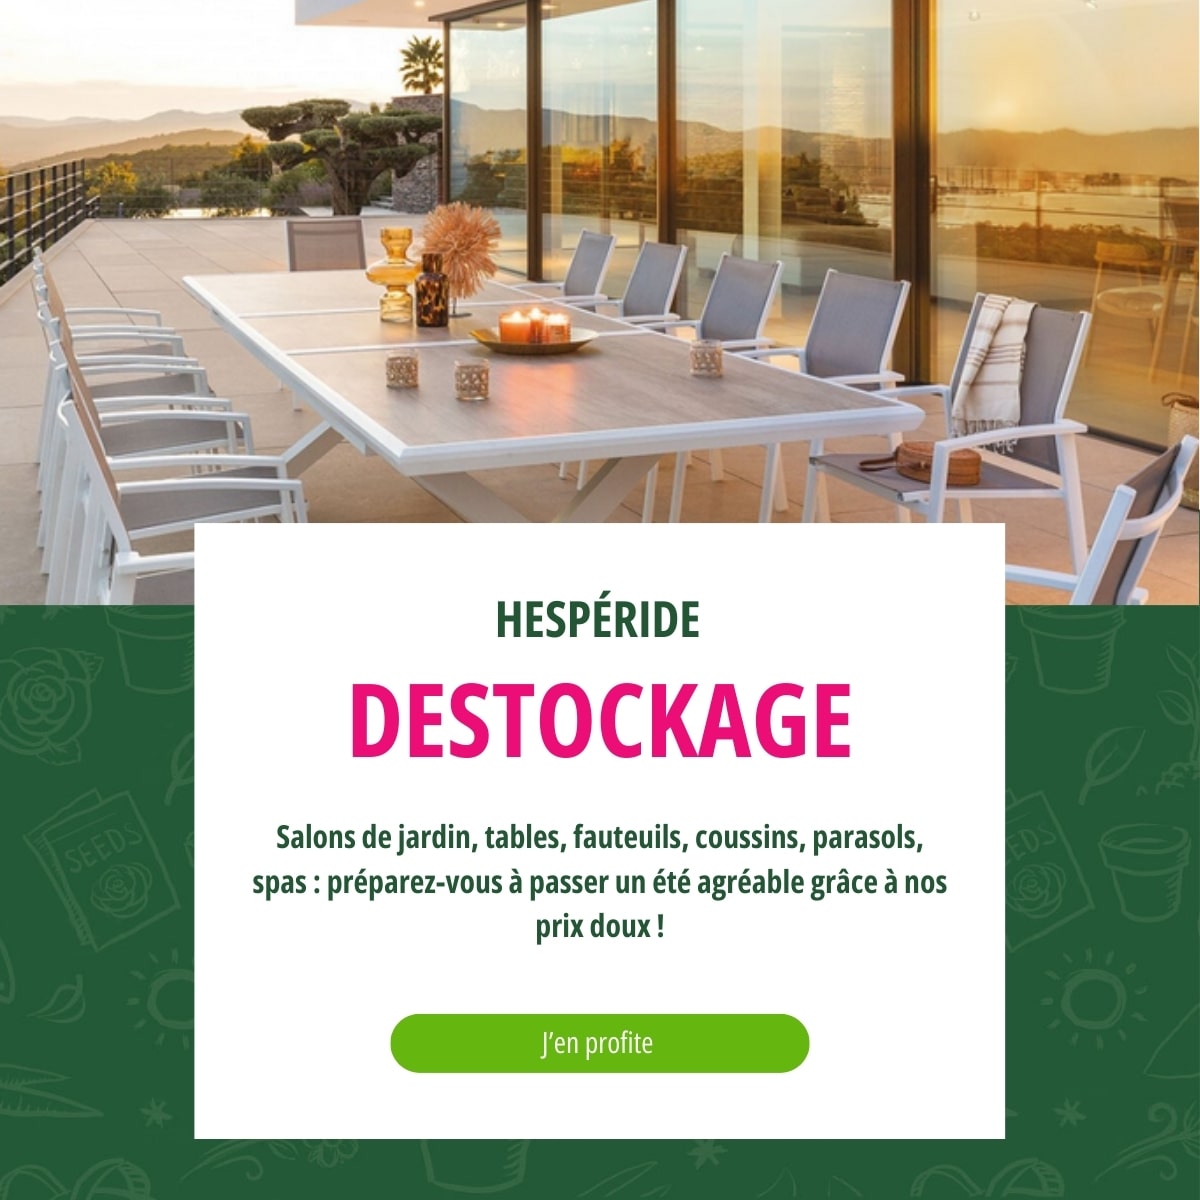 Destockage HESPERIDE Mobile